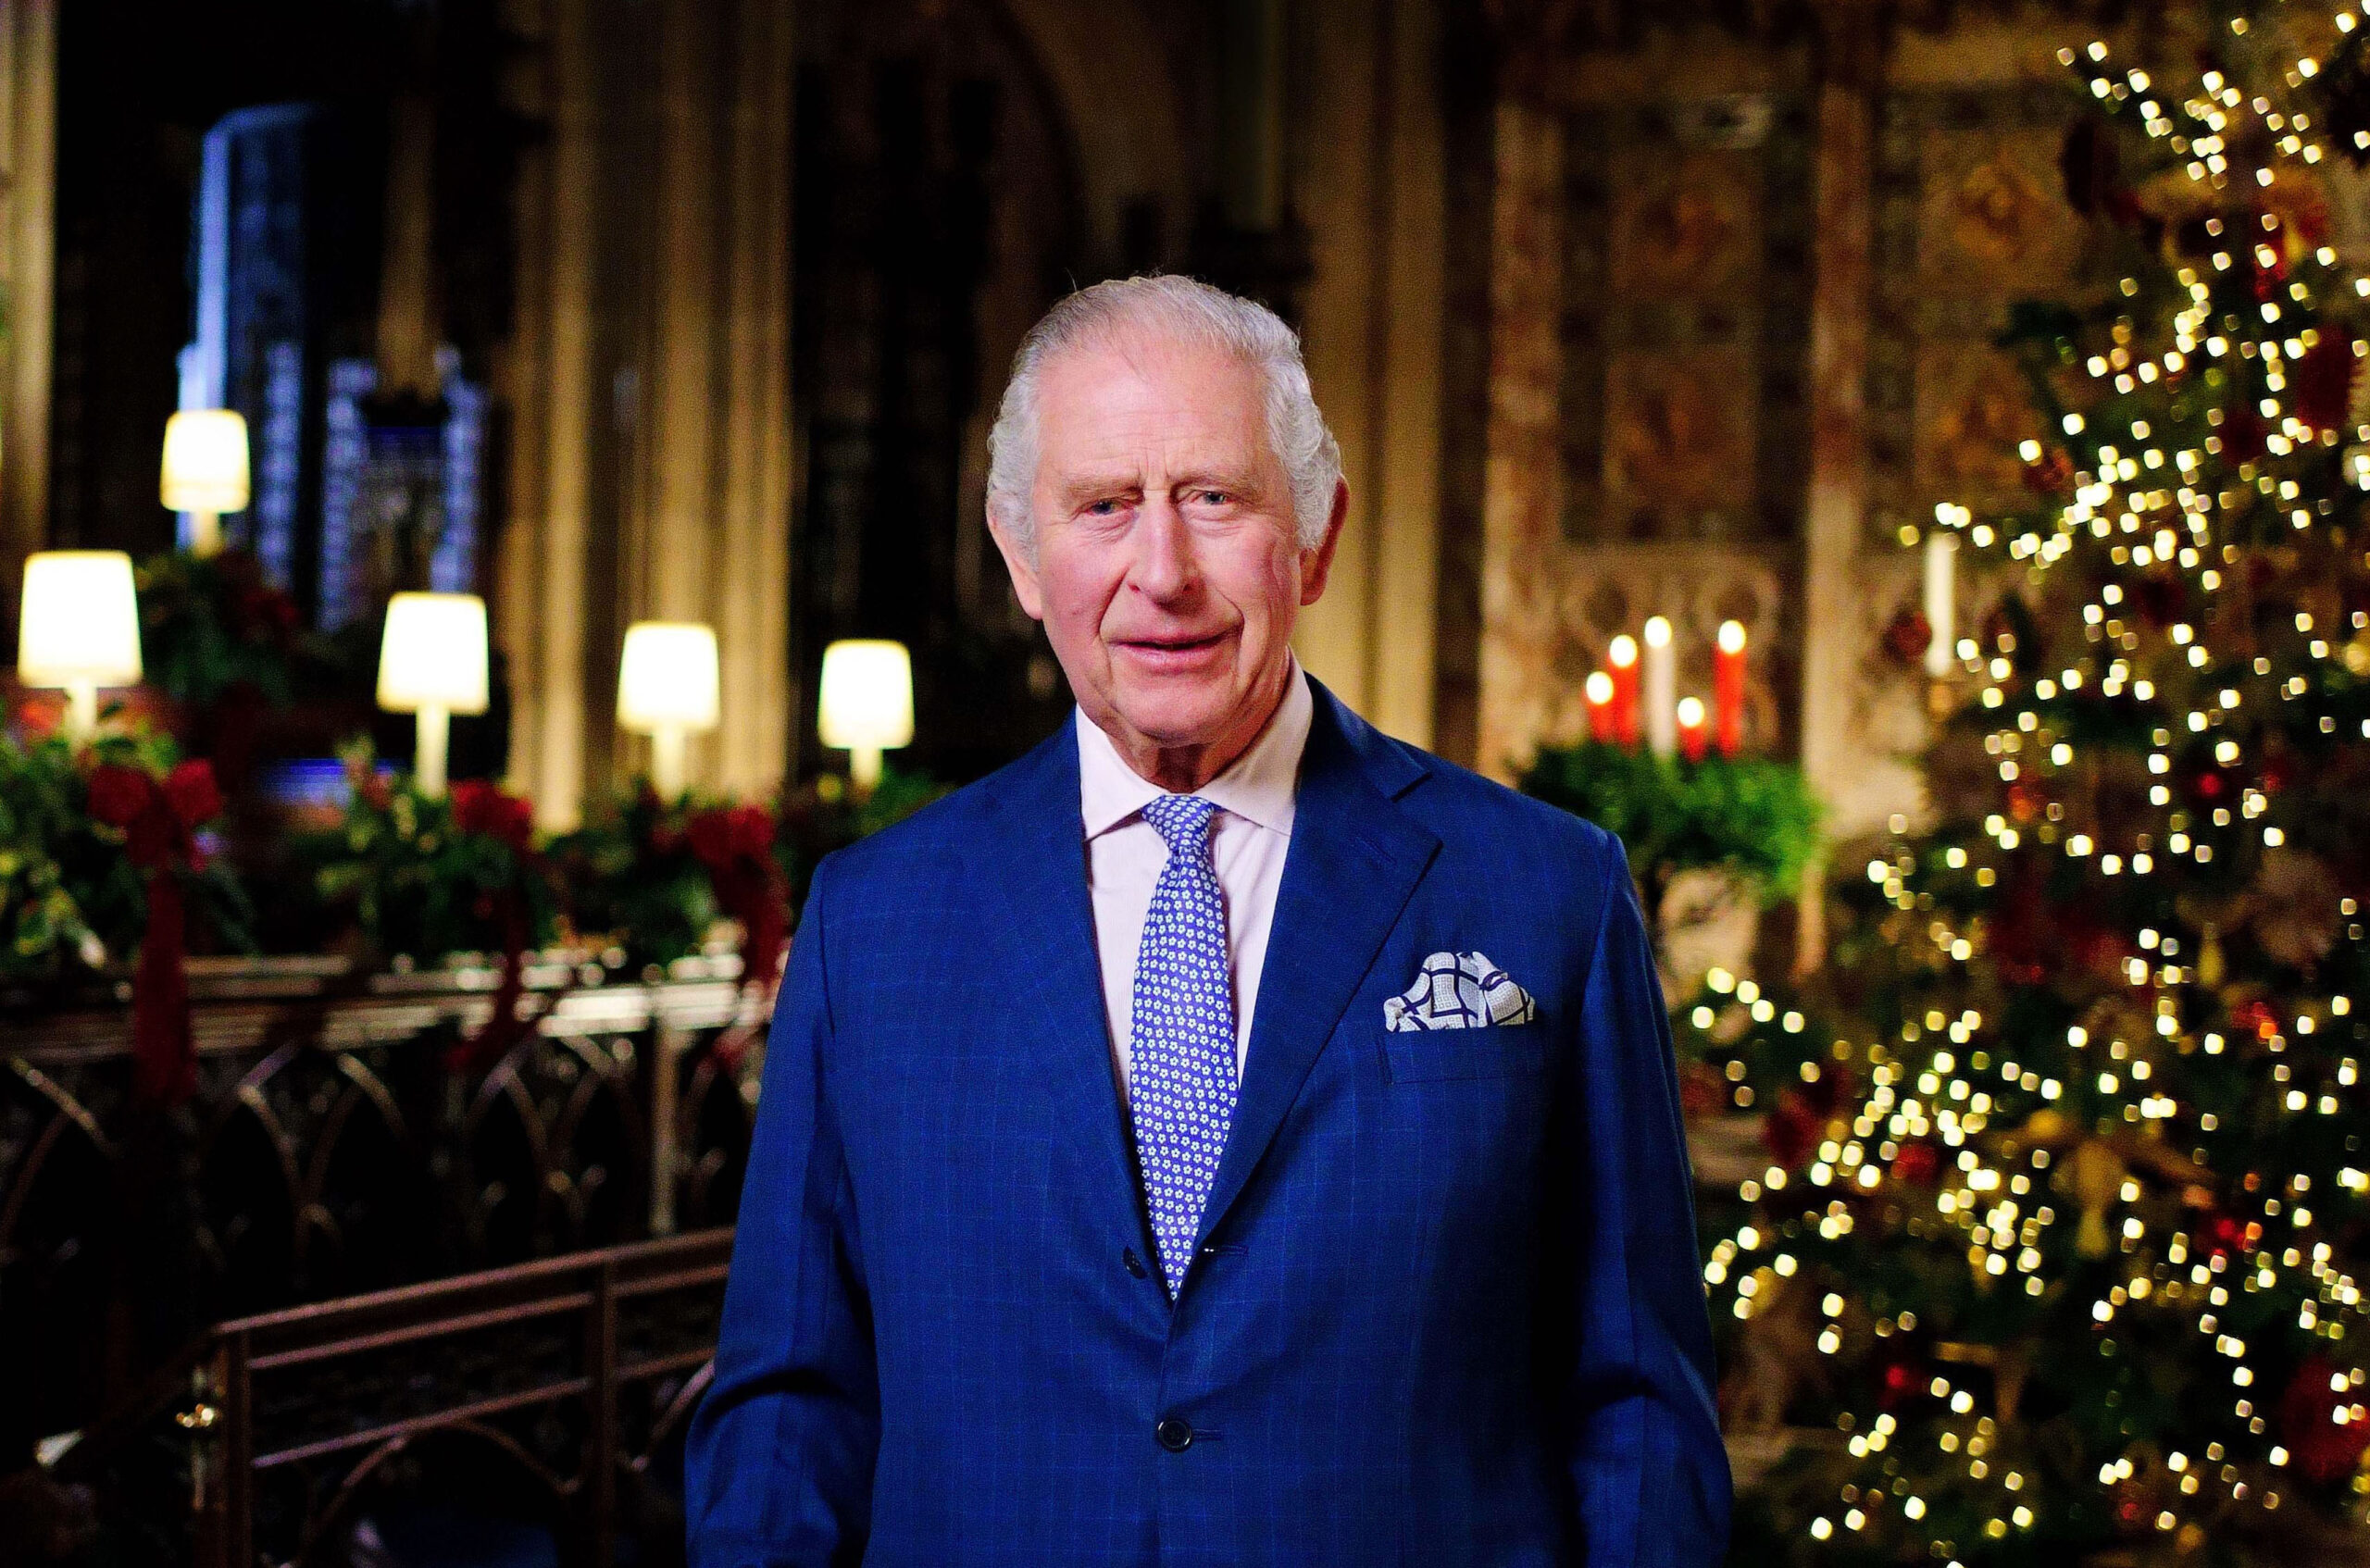 King Charles III at Windsor Castle, on December 13, 2022 in Windsor, England | Source: Getty Images